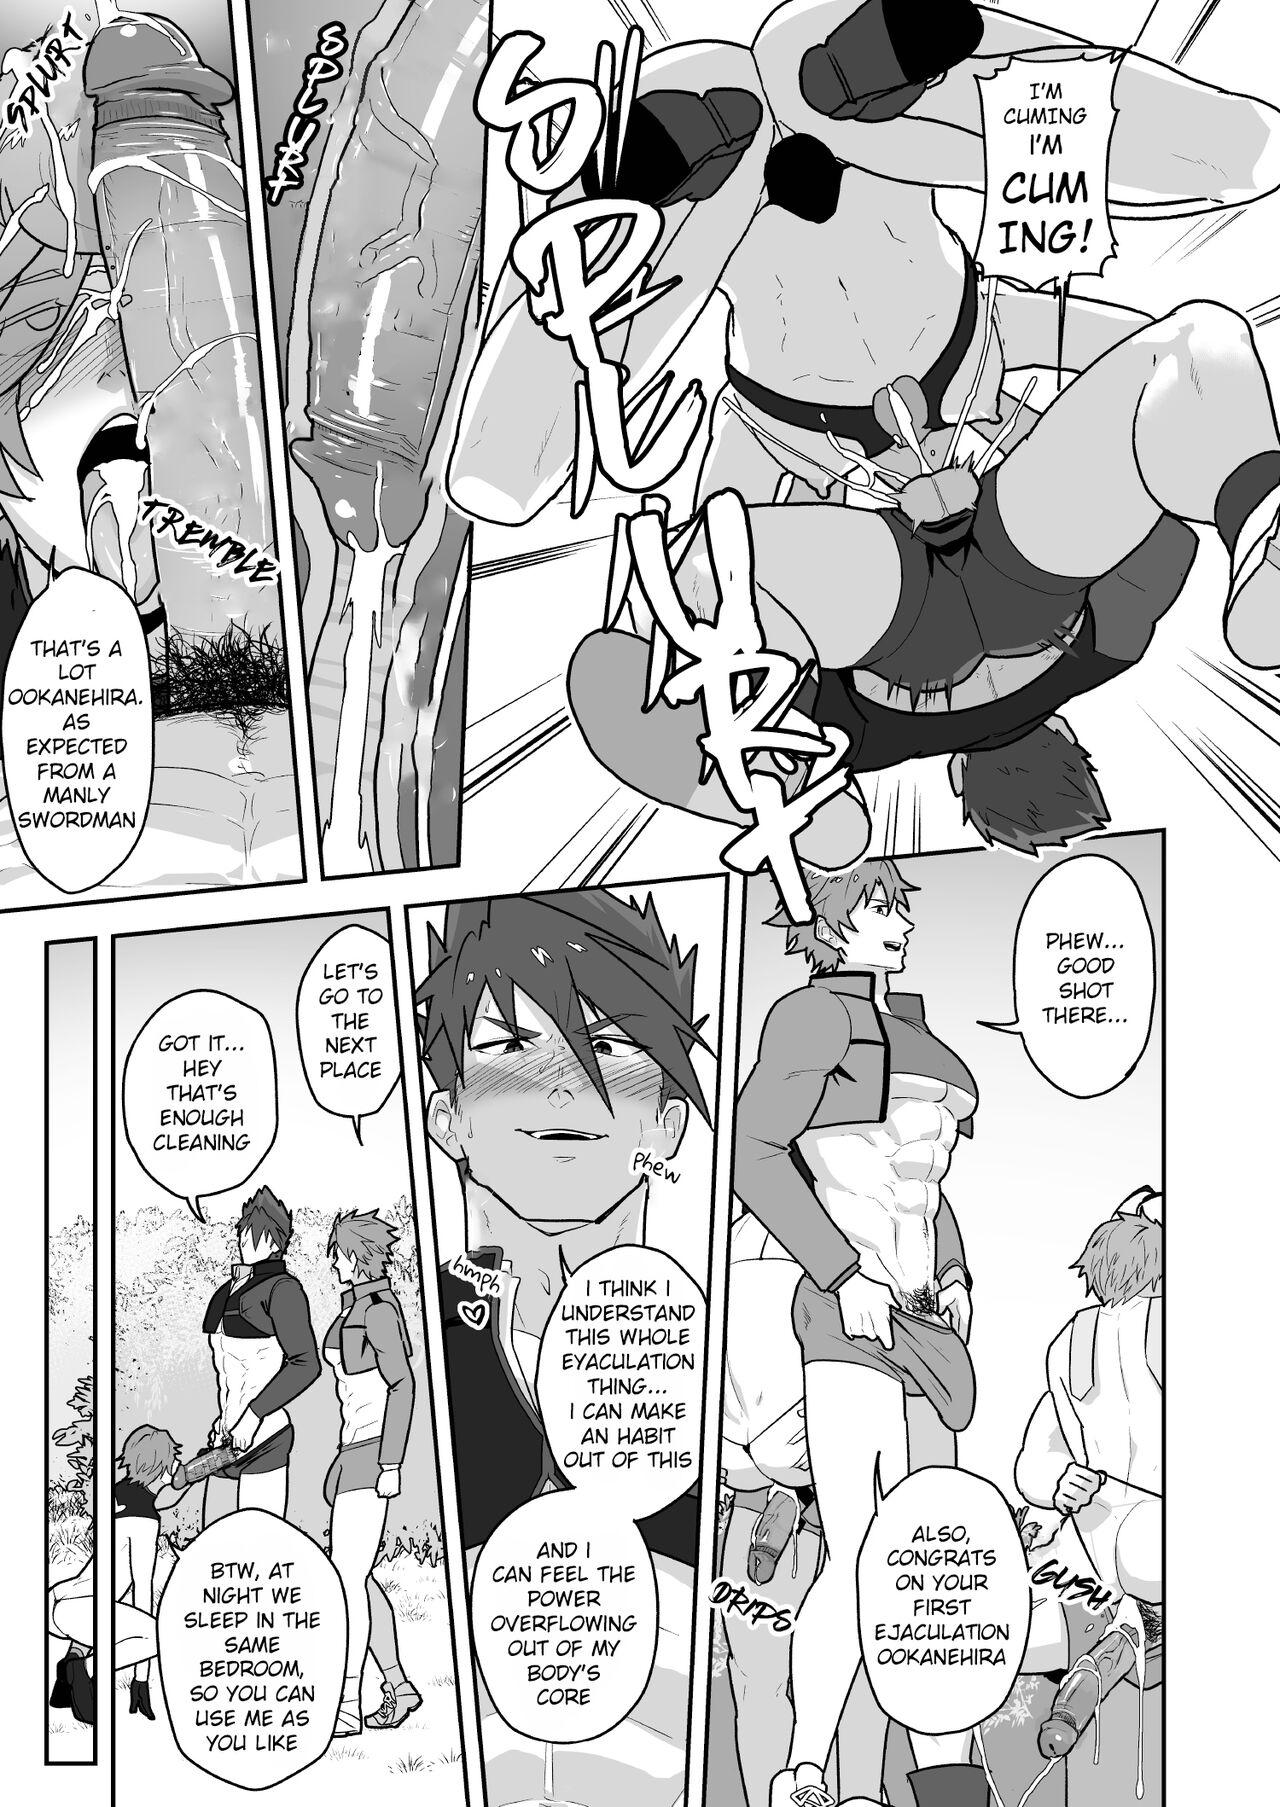 Solo TOARU OSU DANSHI - A CERTAIN MANLY GUY - Touken ranbu Threesome - Page 11